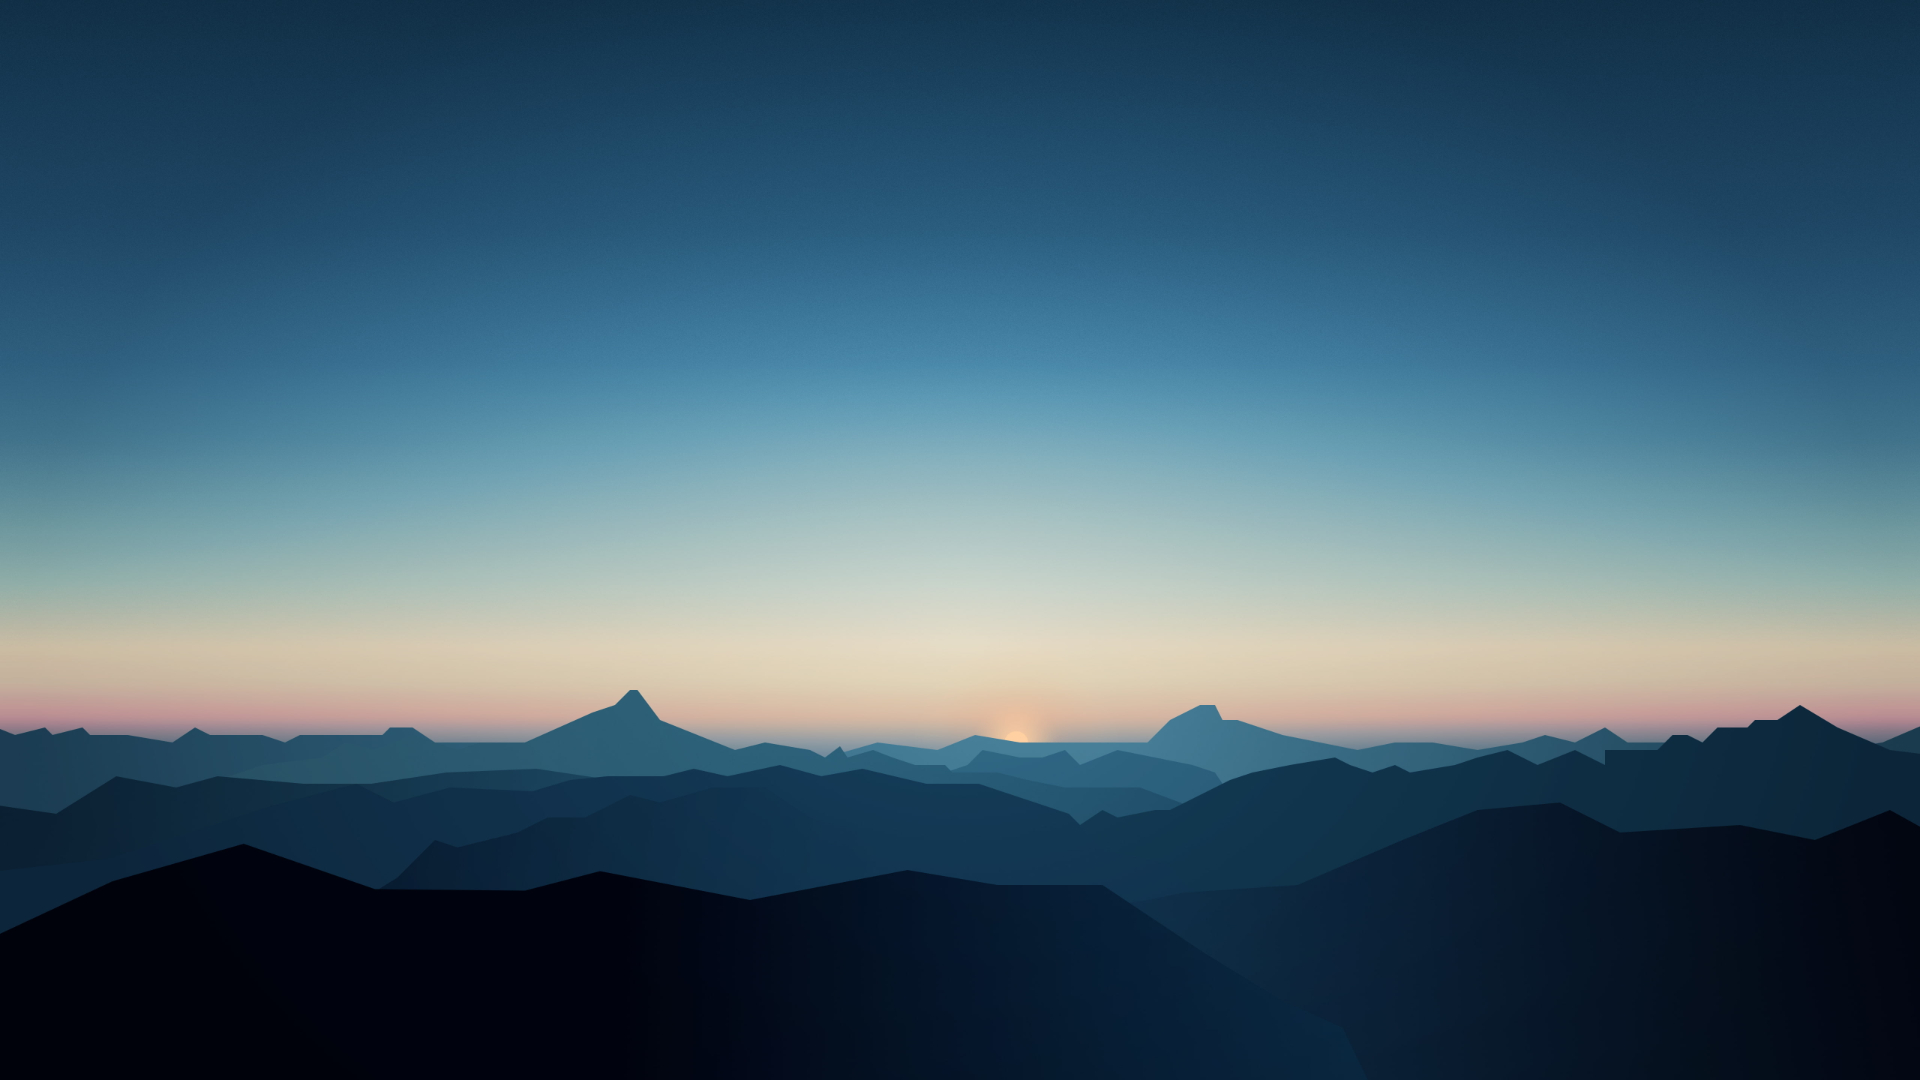 General 1920x1080 minimalism sky mountains landscape nature digital art